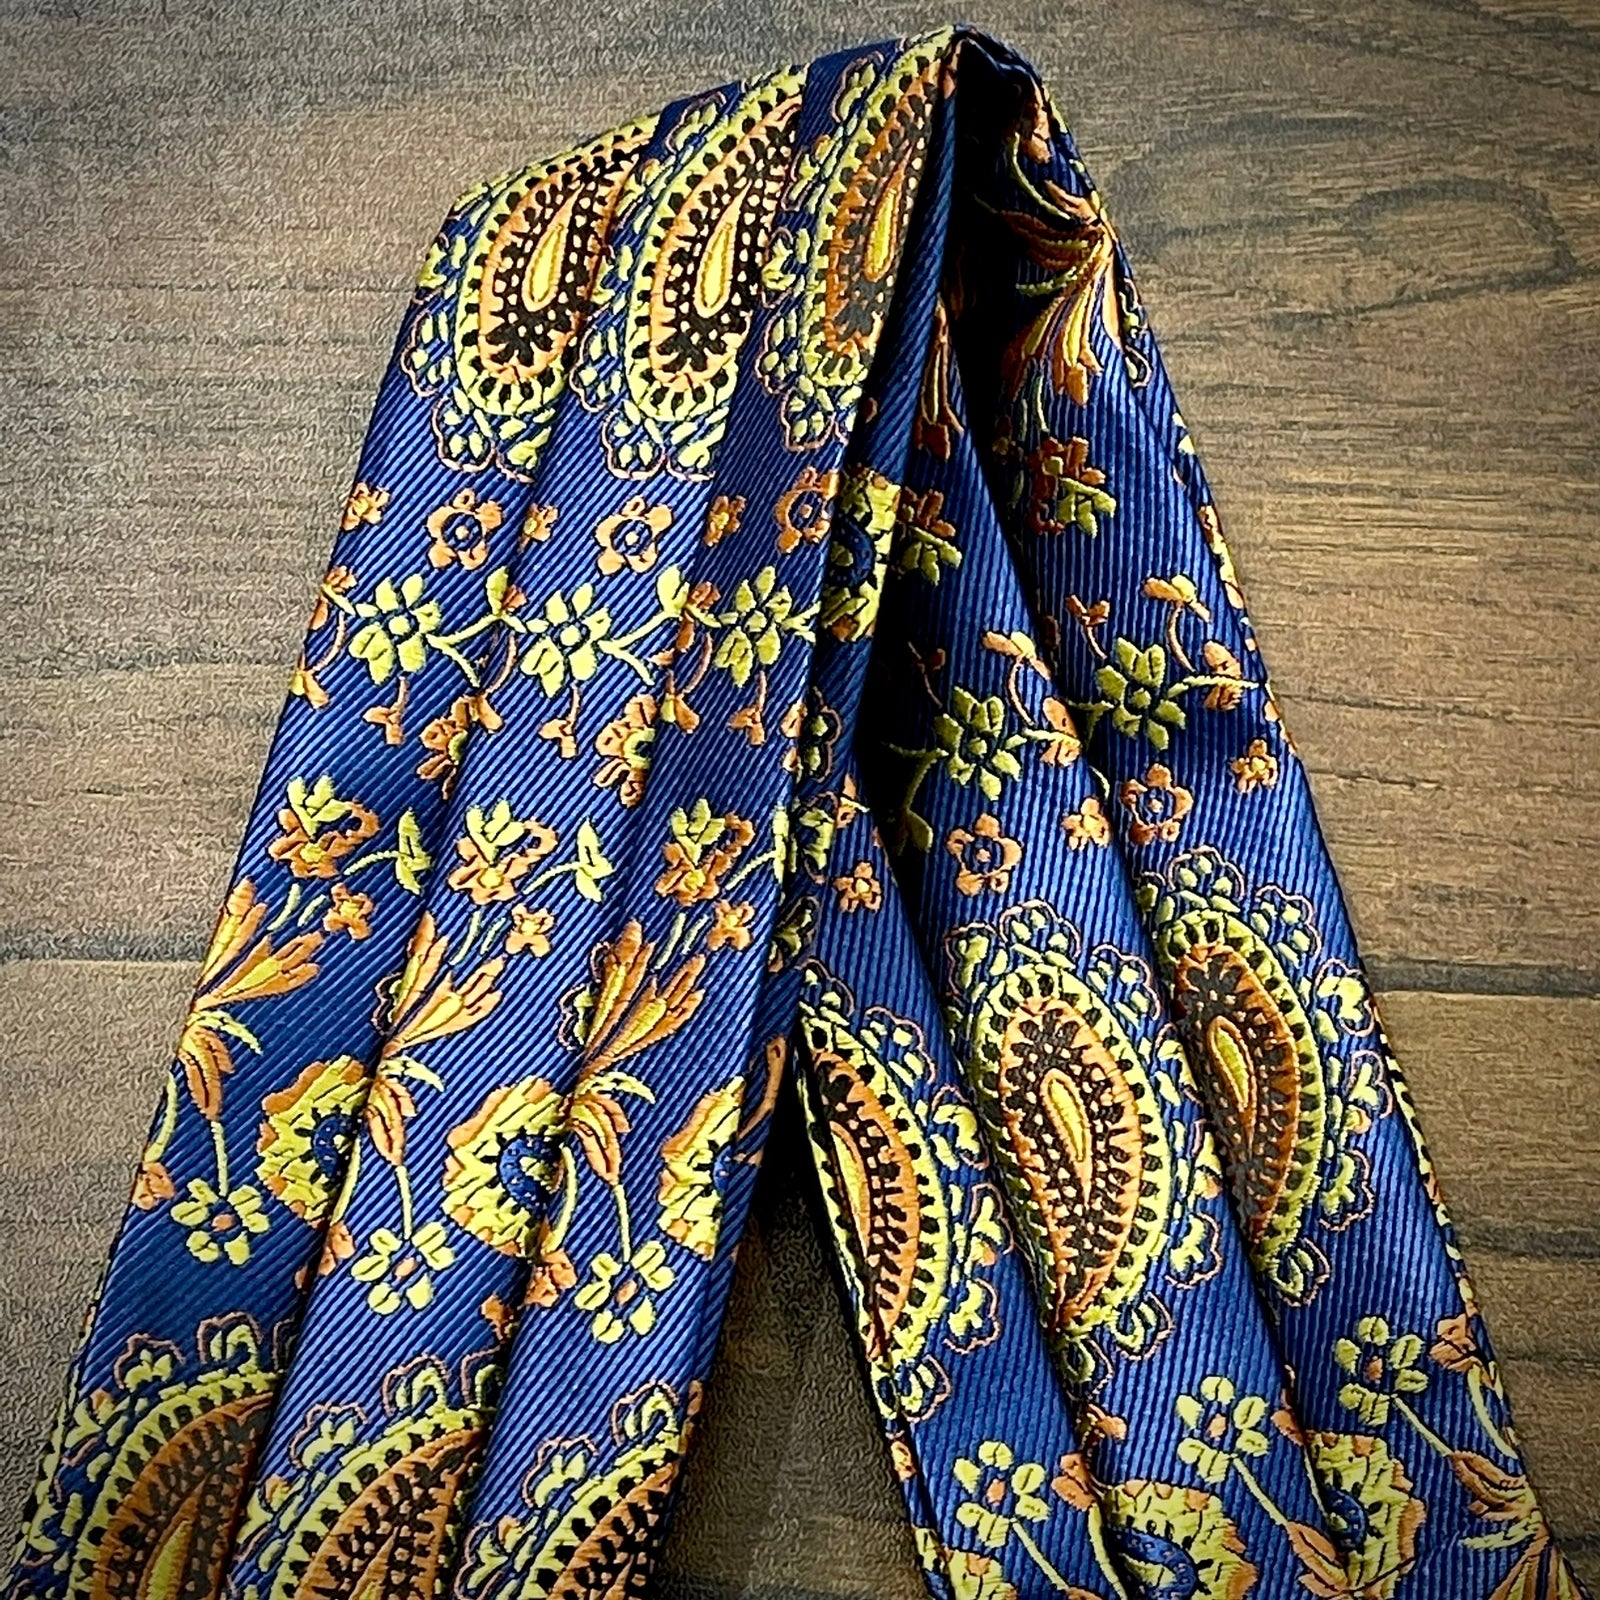 Blue and Golden Floral paisley ascot cravat tie silk neck scarf for men in pakistan